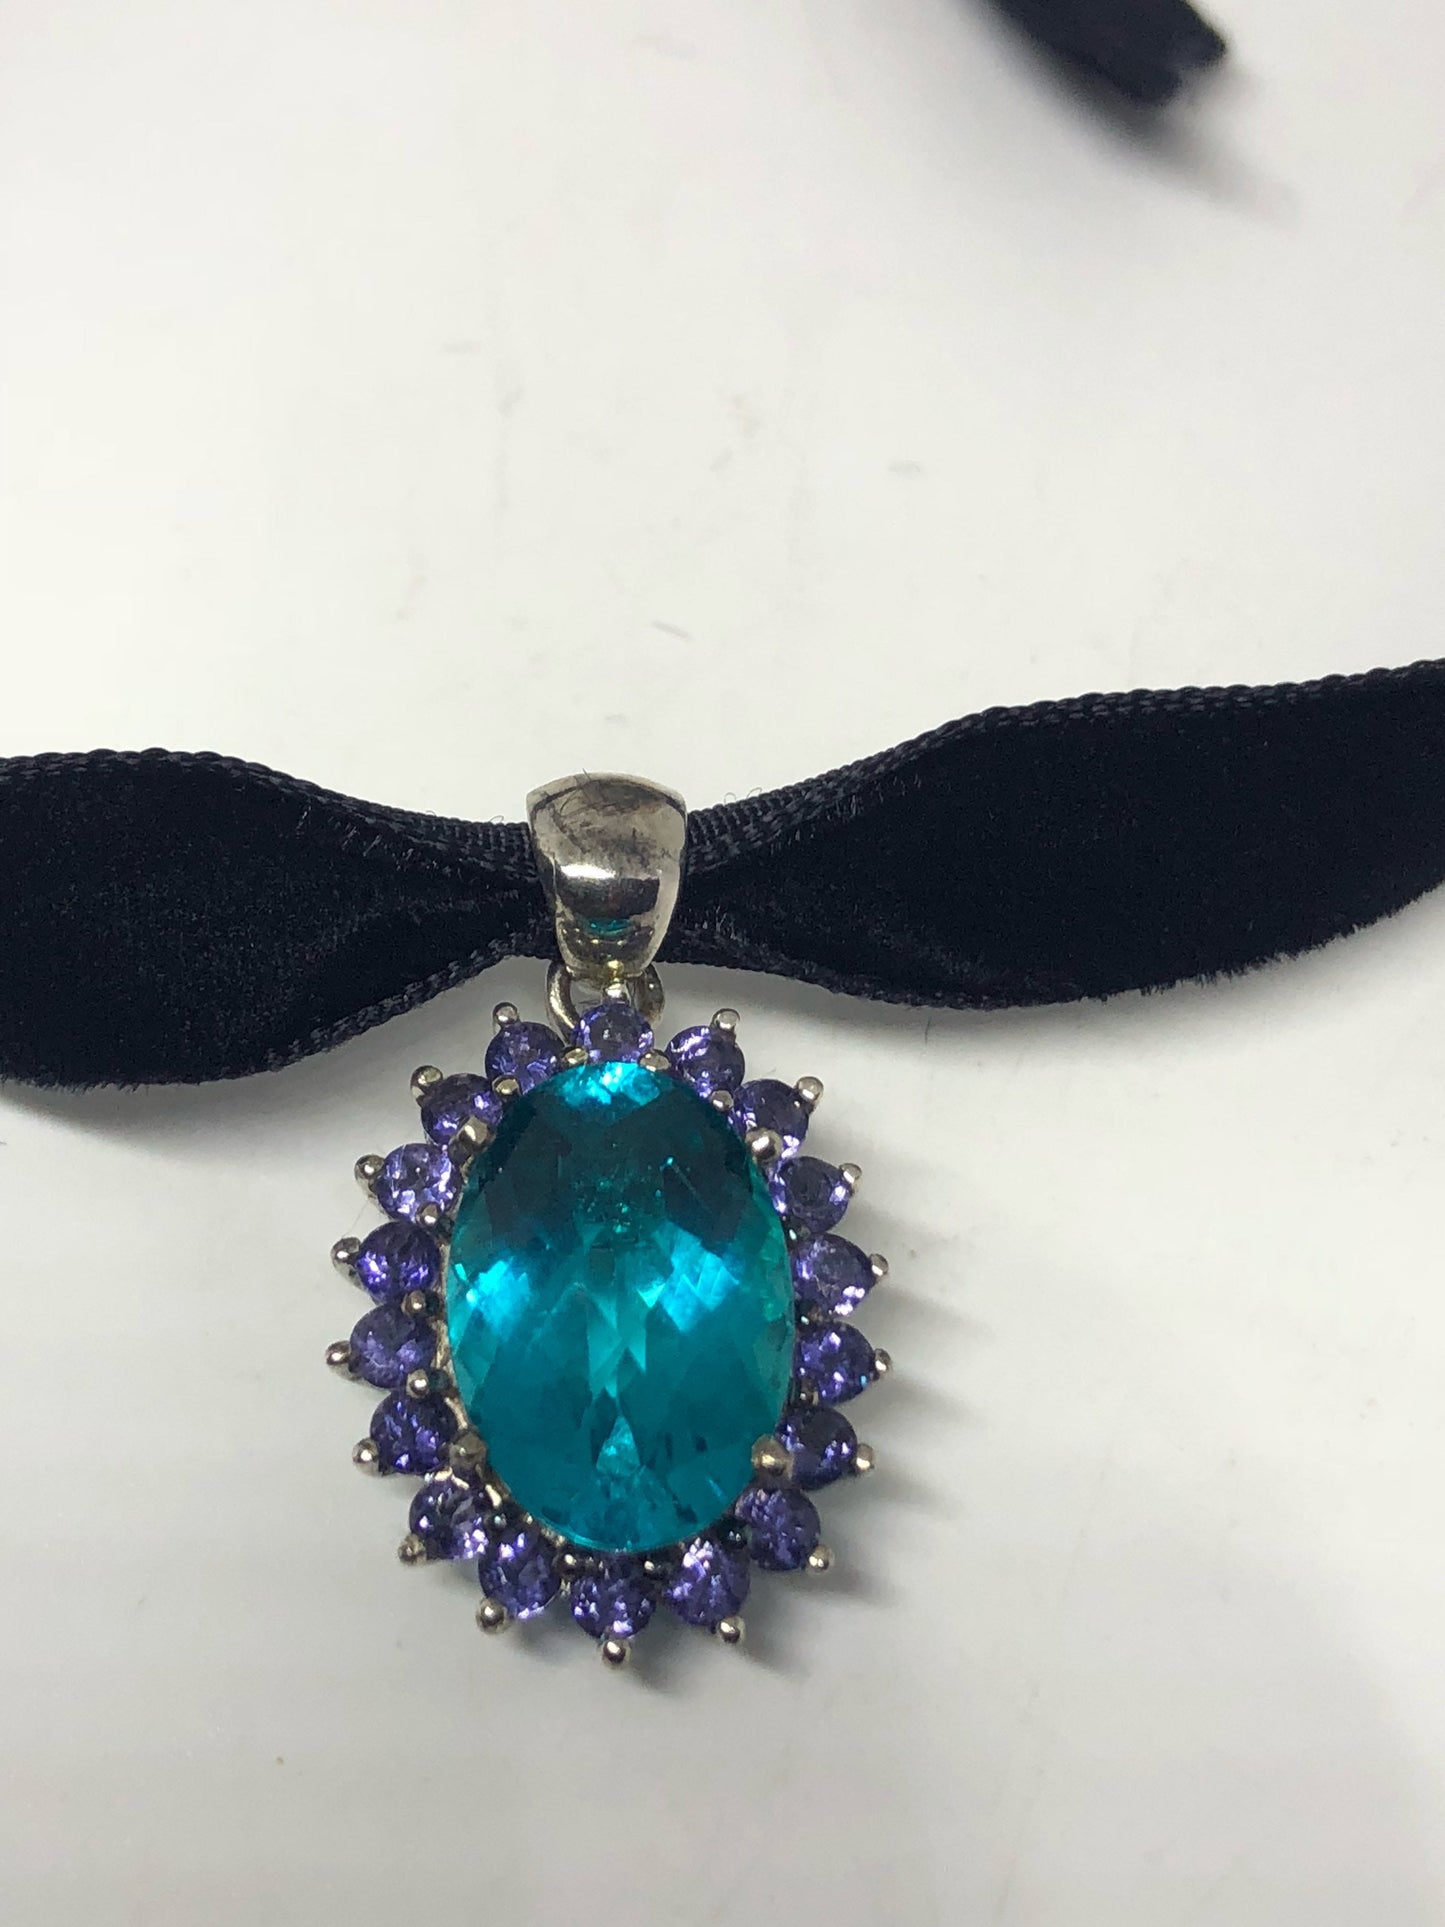 Vintage Genuine Deep Blue Topaz with Iolite 925 Sterling Silver Necklace Pendant